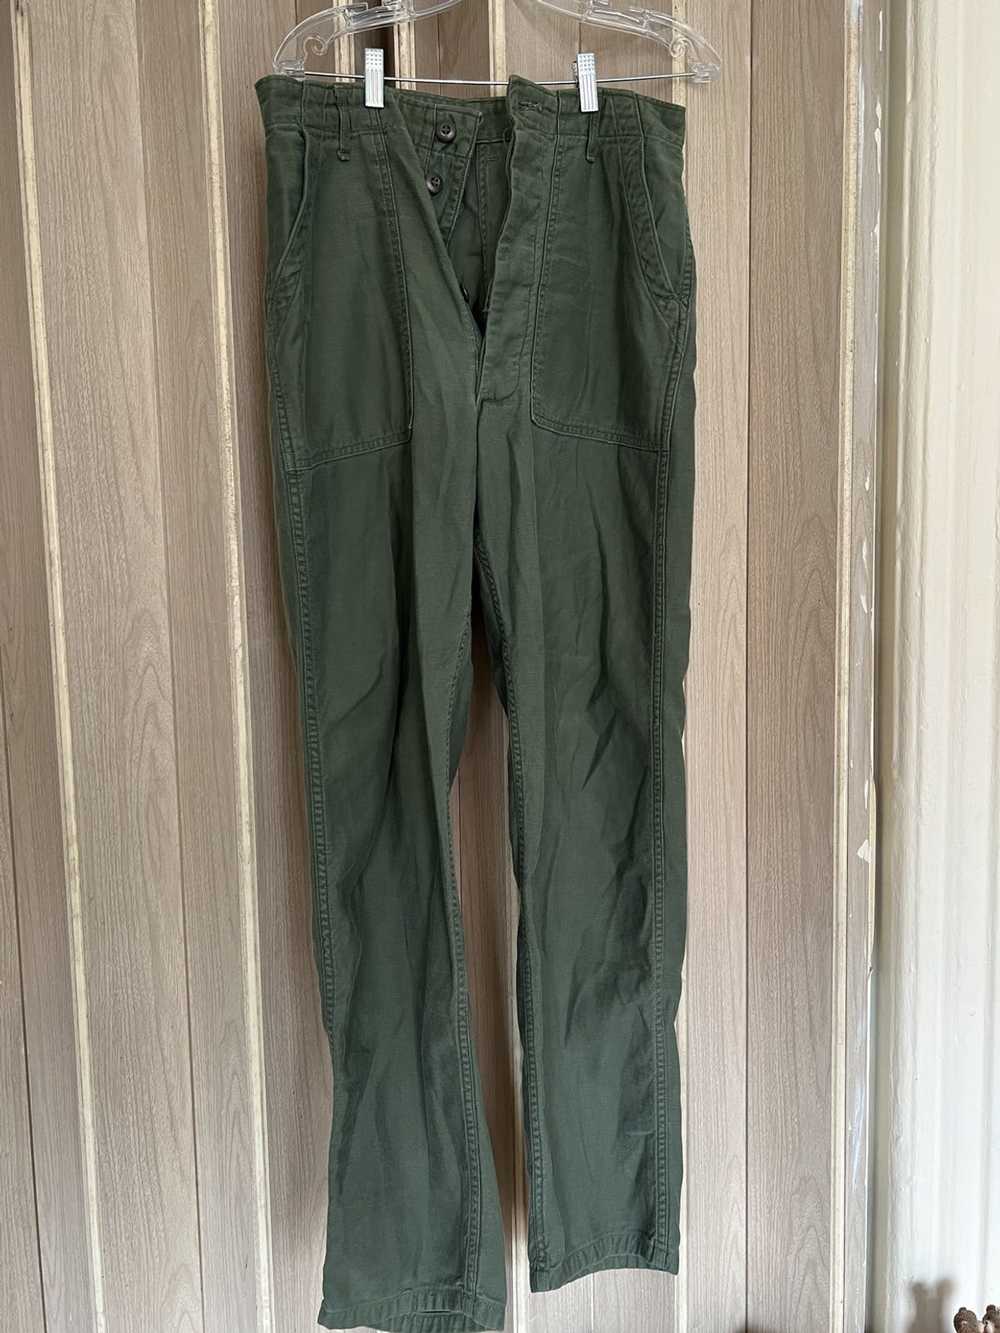 Vintage Vintage green army trouser pants - image 2